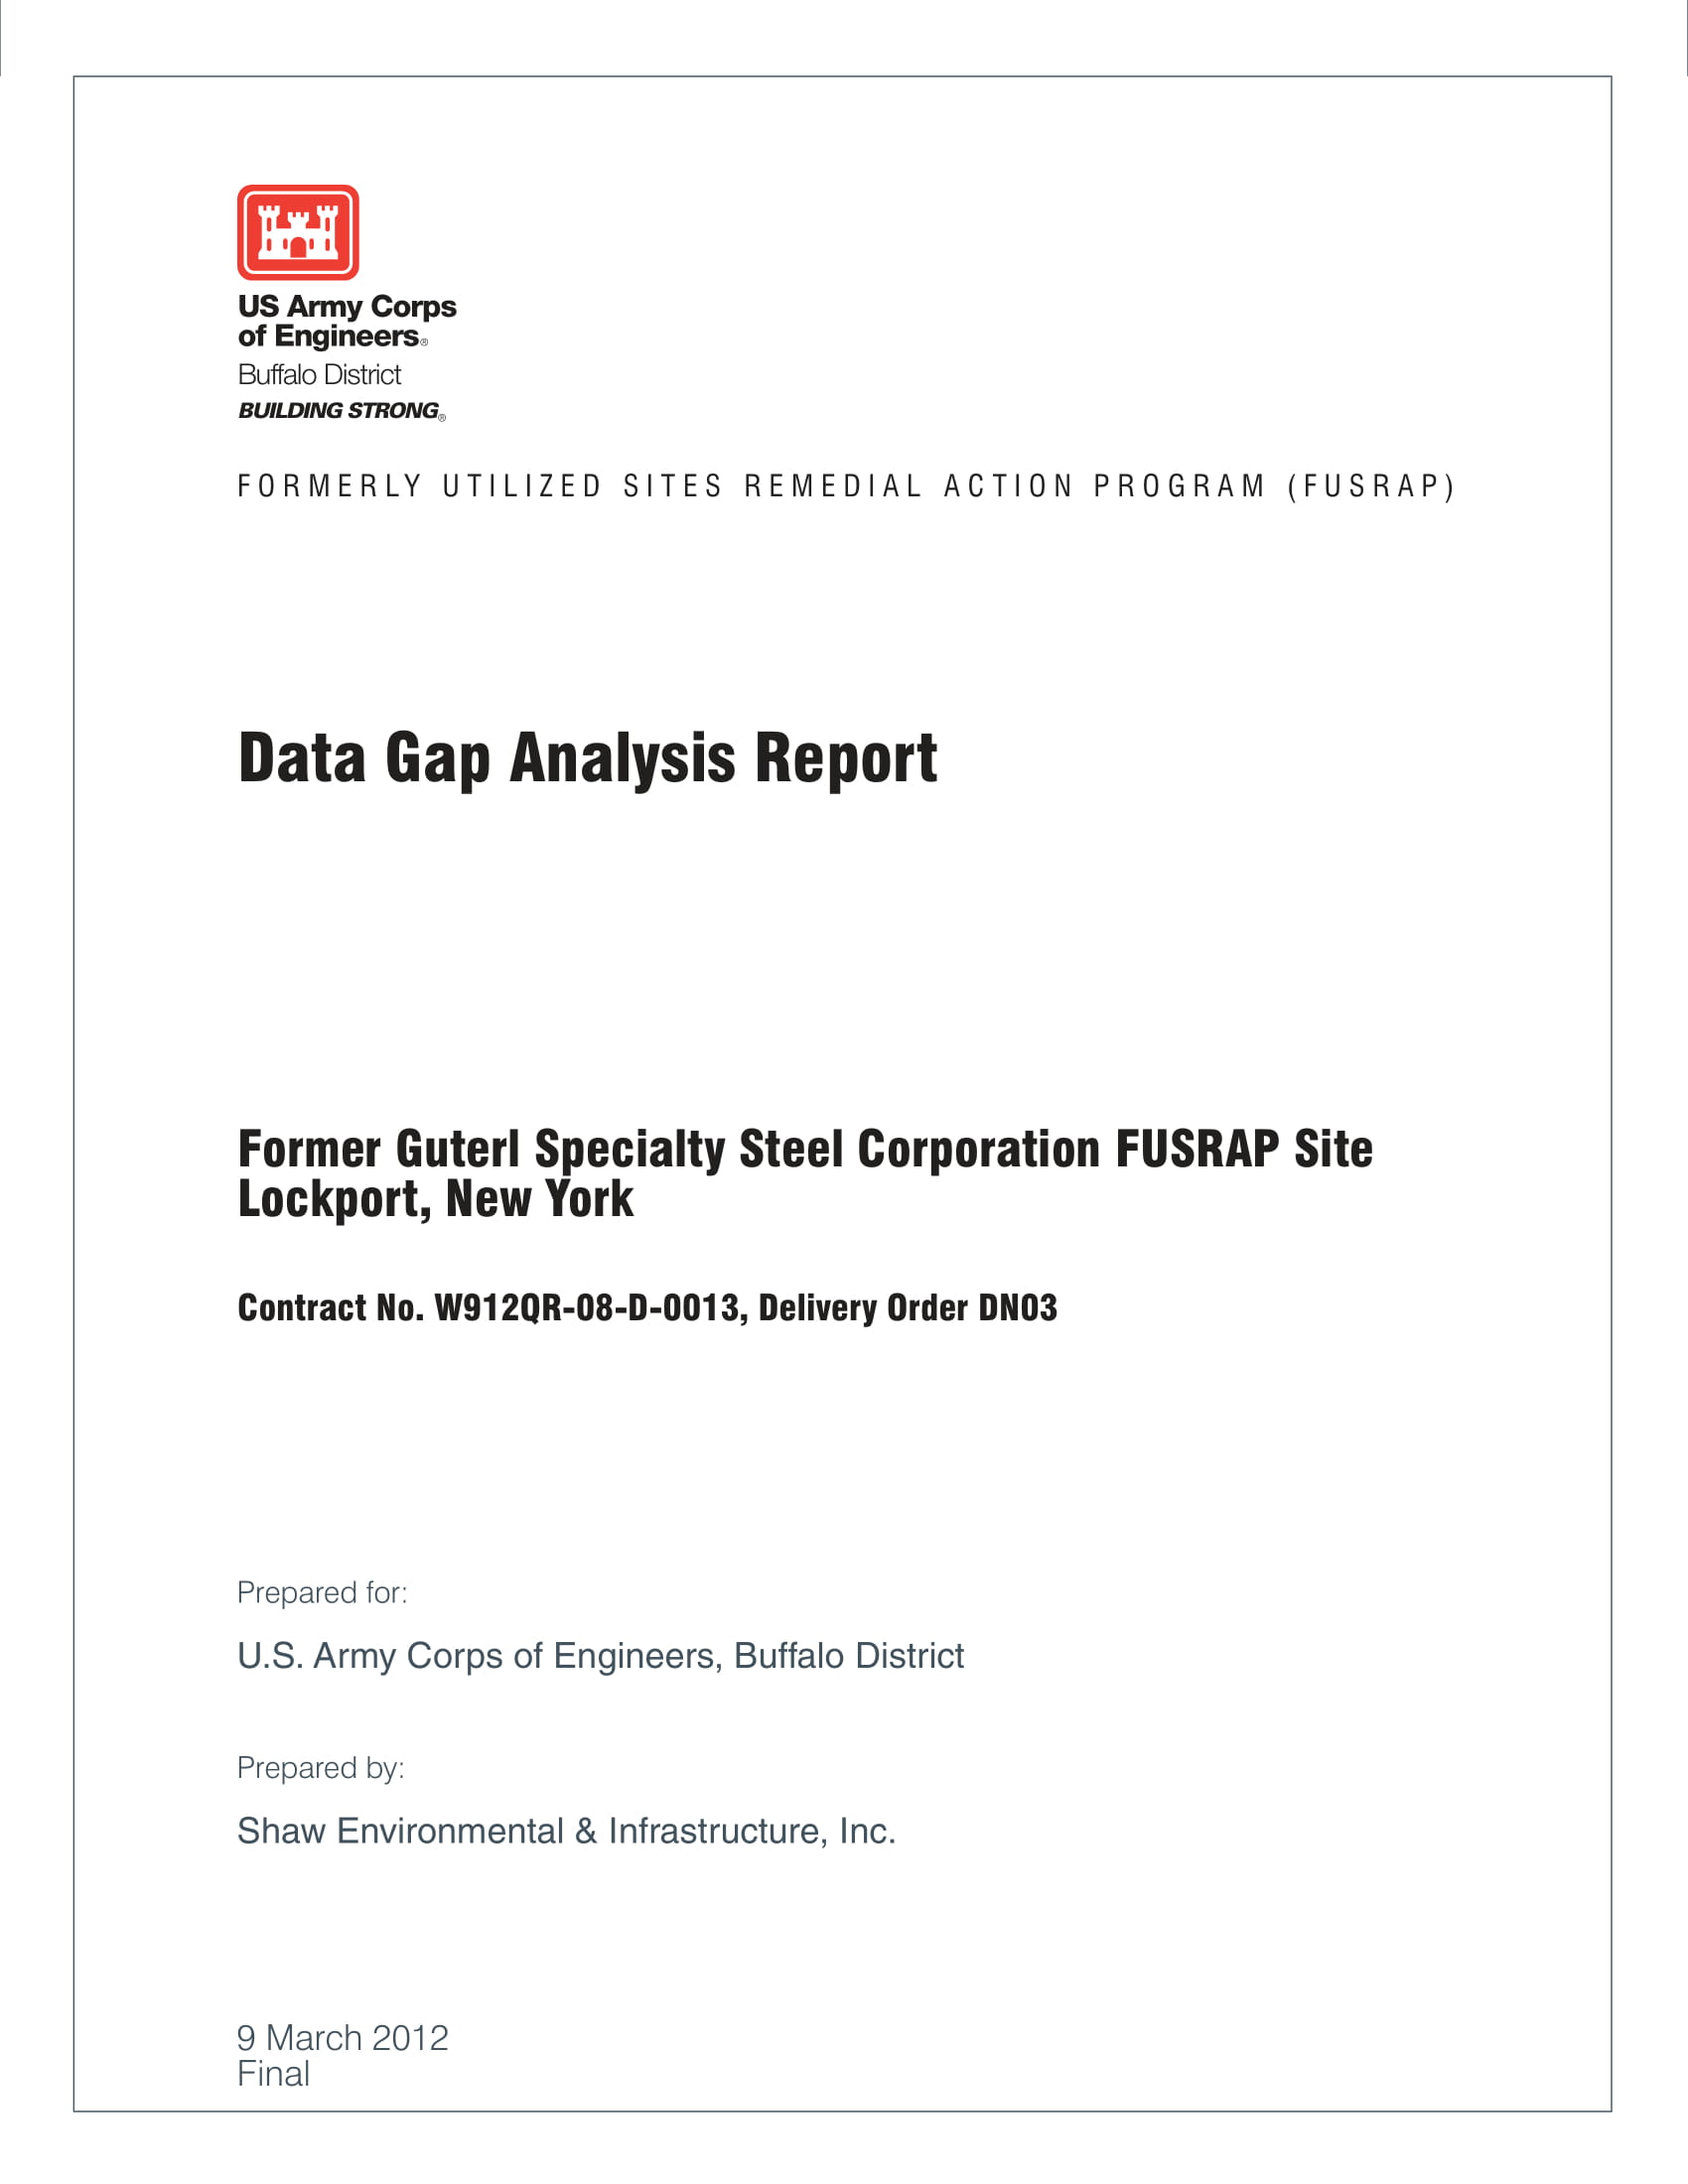 detailed data gap analysis report example 001